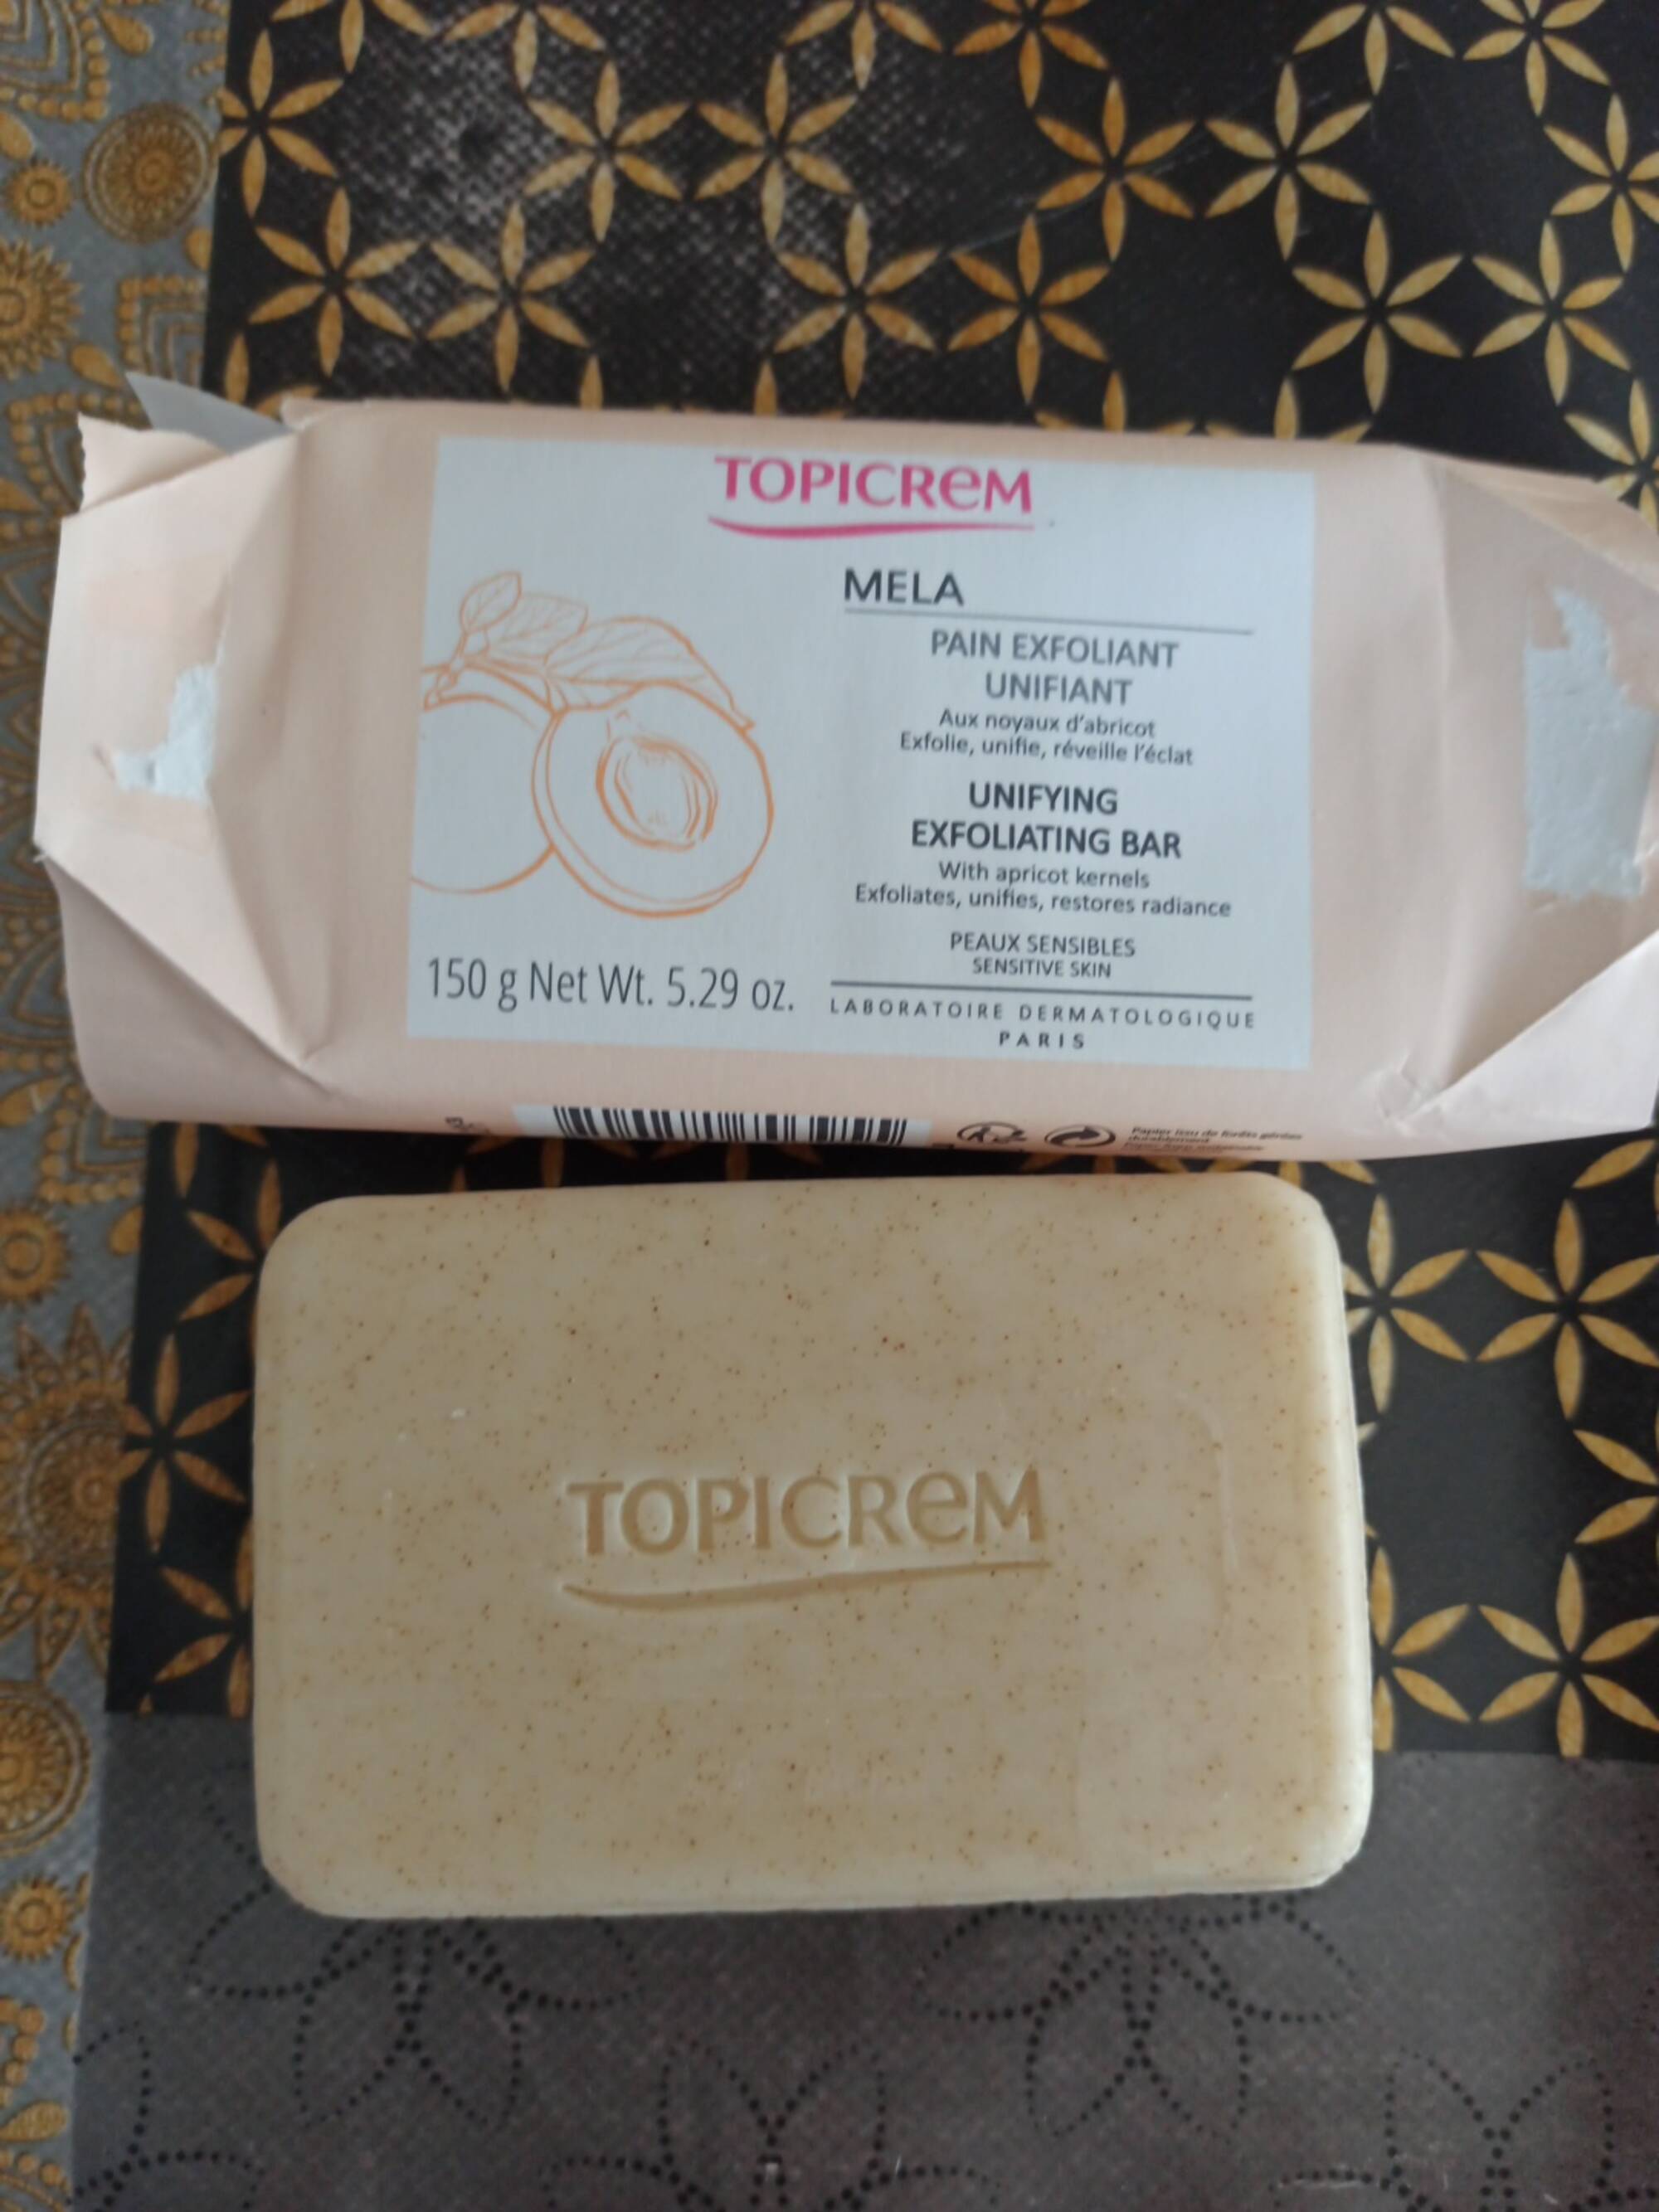 TOPICREM - Mela - Pain exfoliant unifiant 